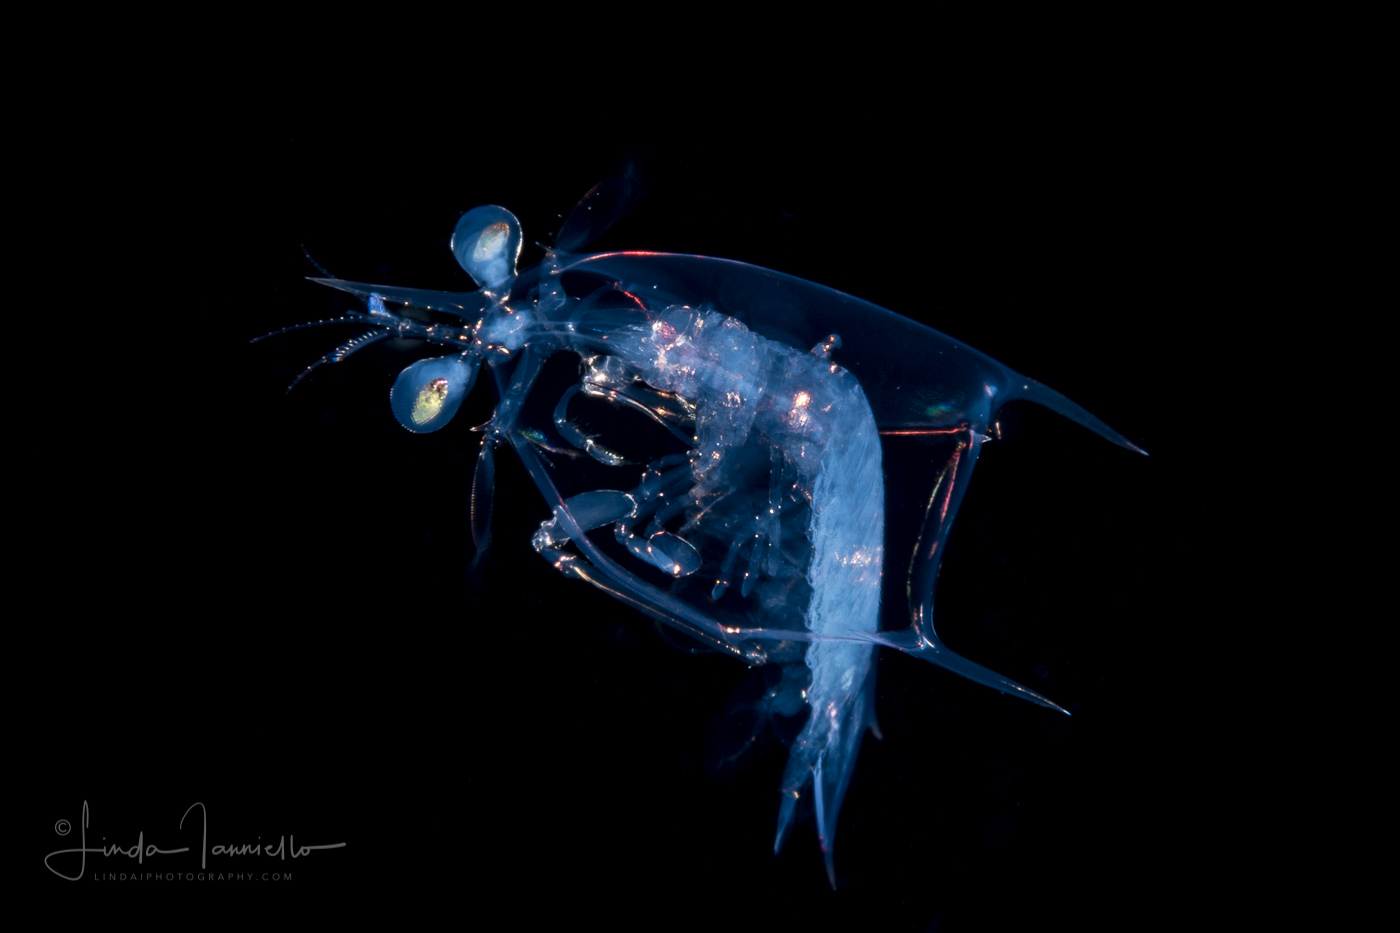 Mantis Shrimp Larva - Stomatopoda